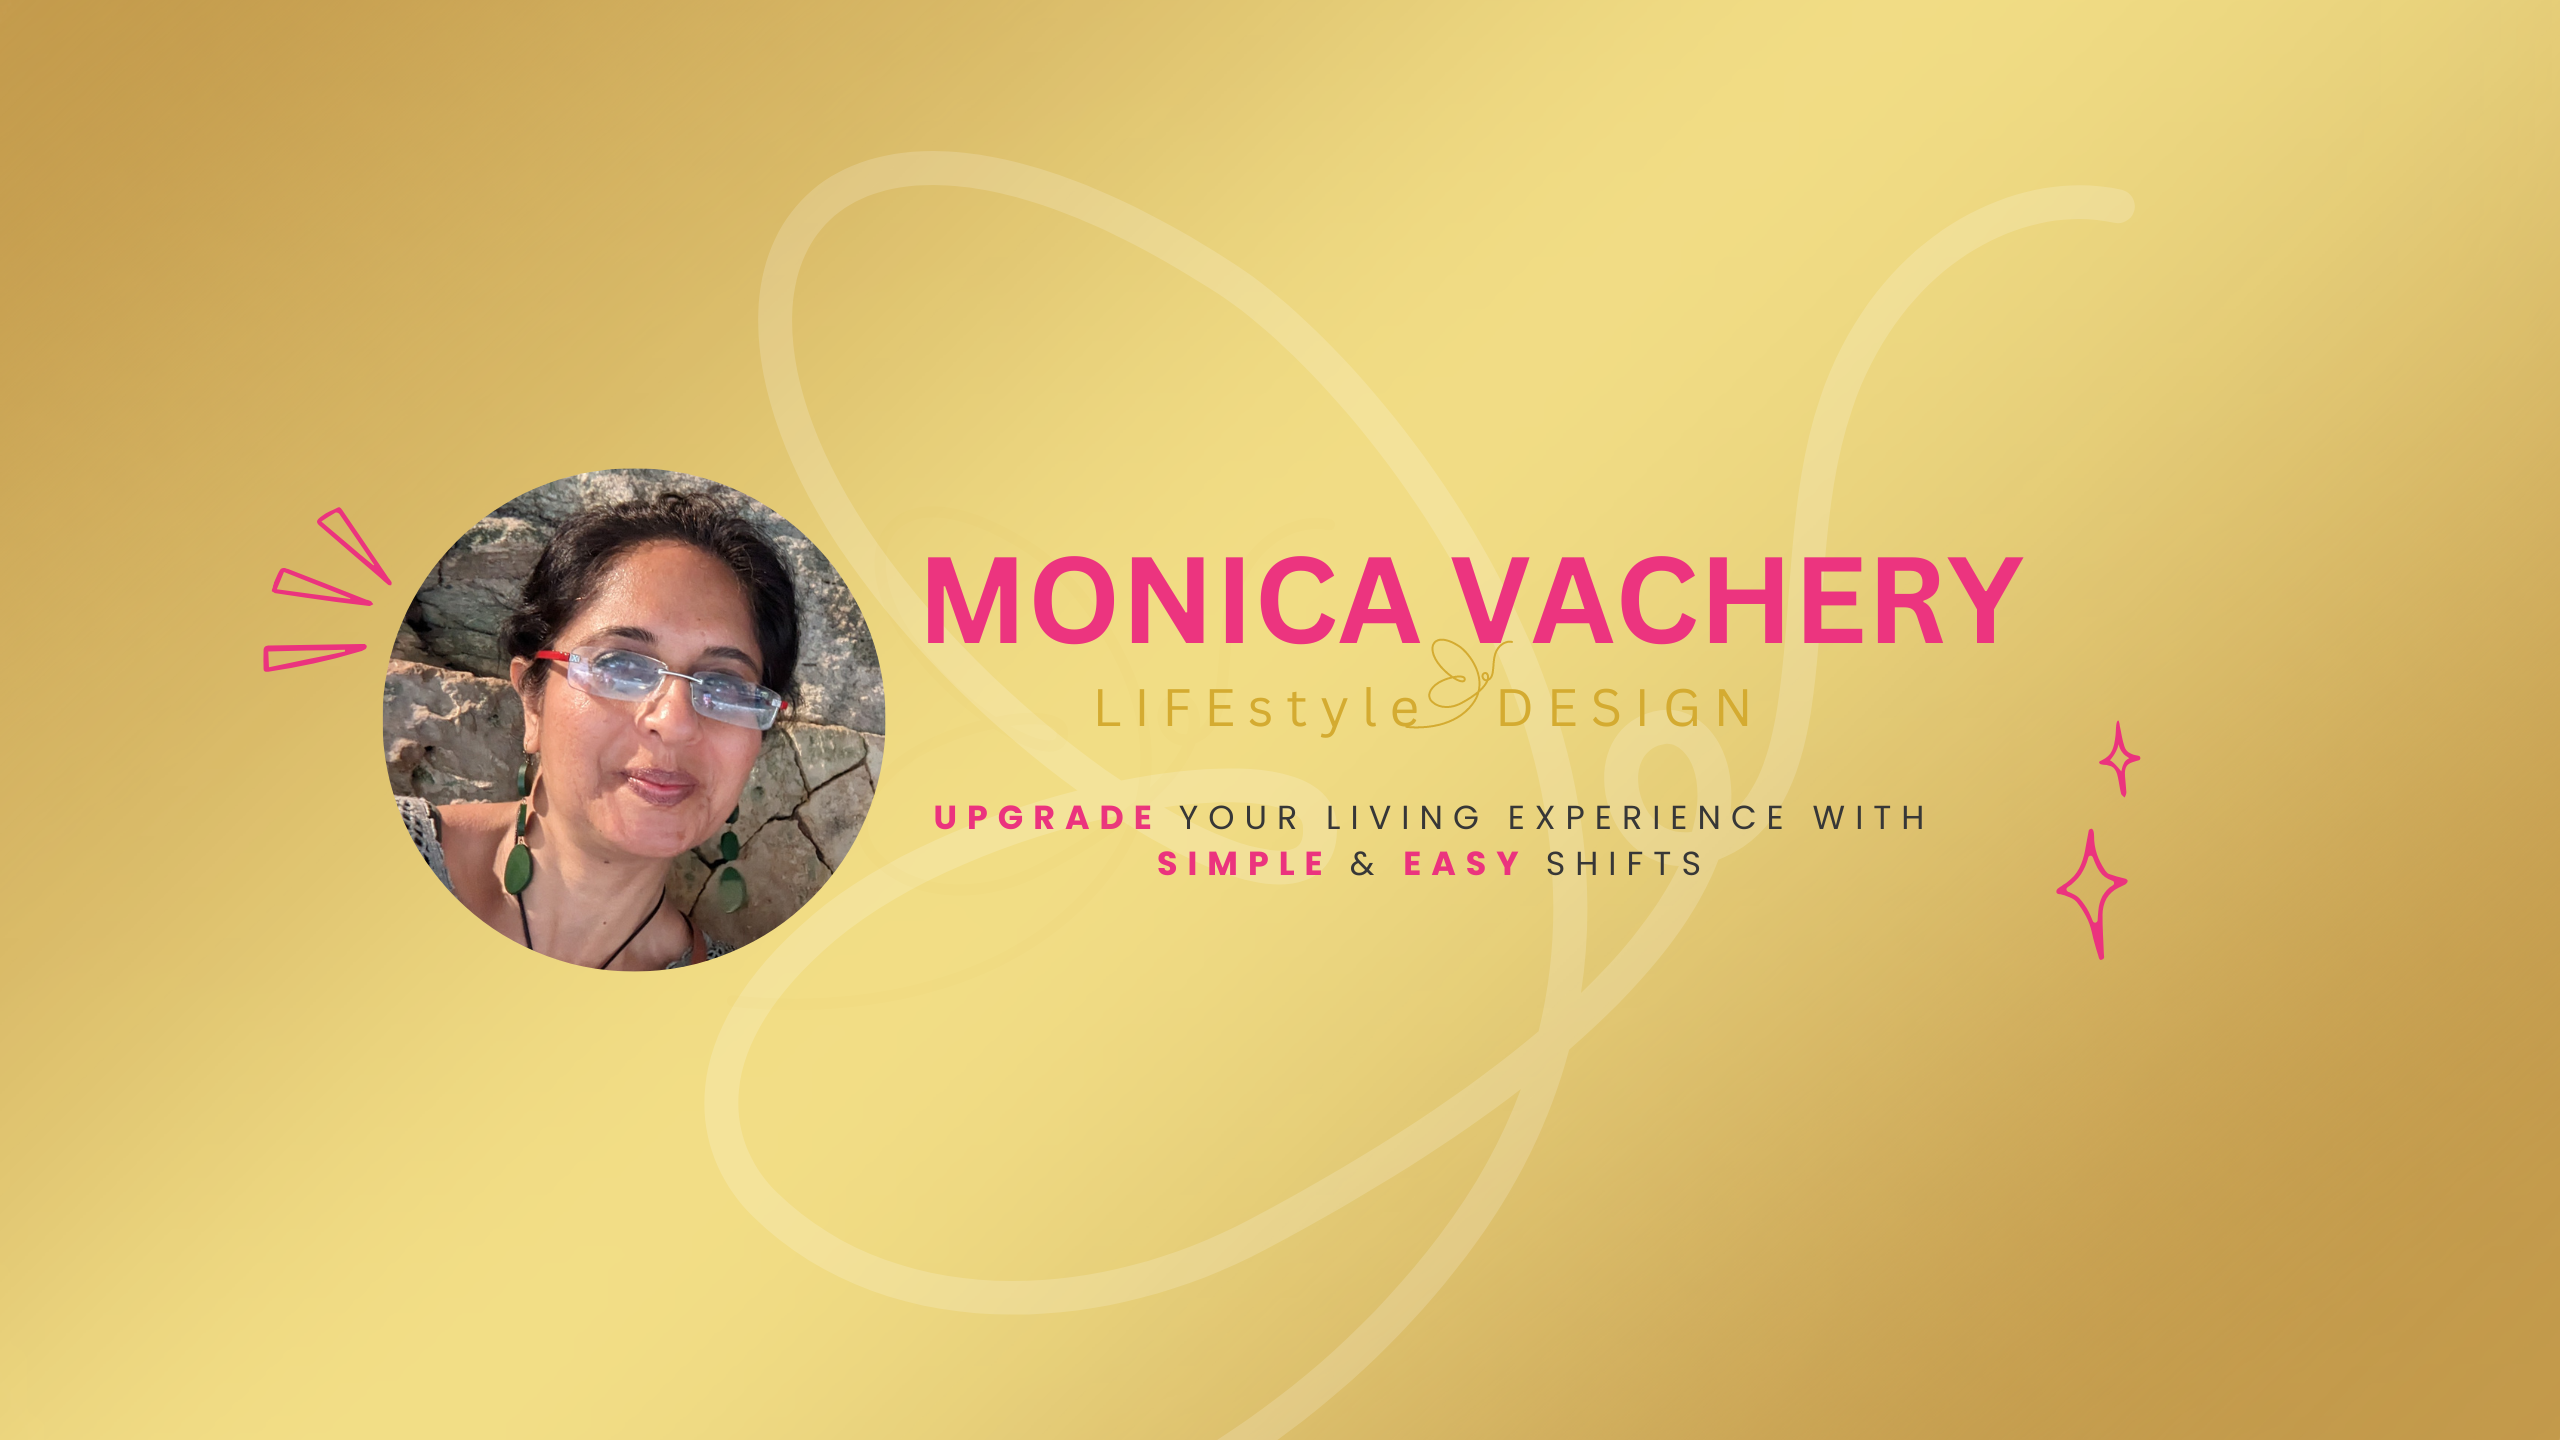 Monica Vachery. The LIFEstyle Design School.